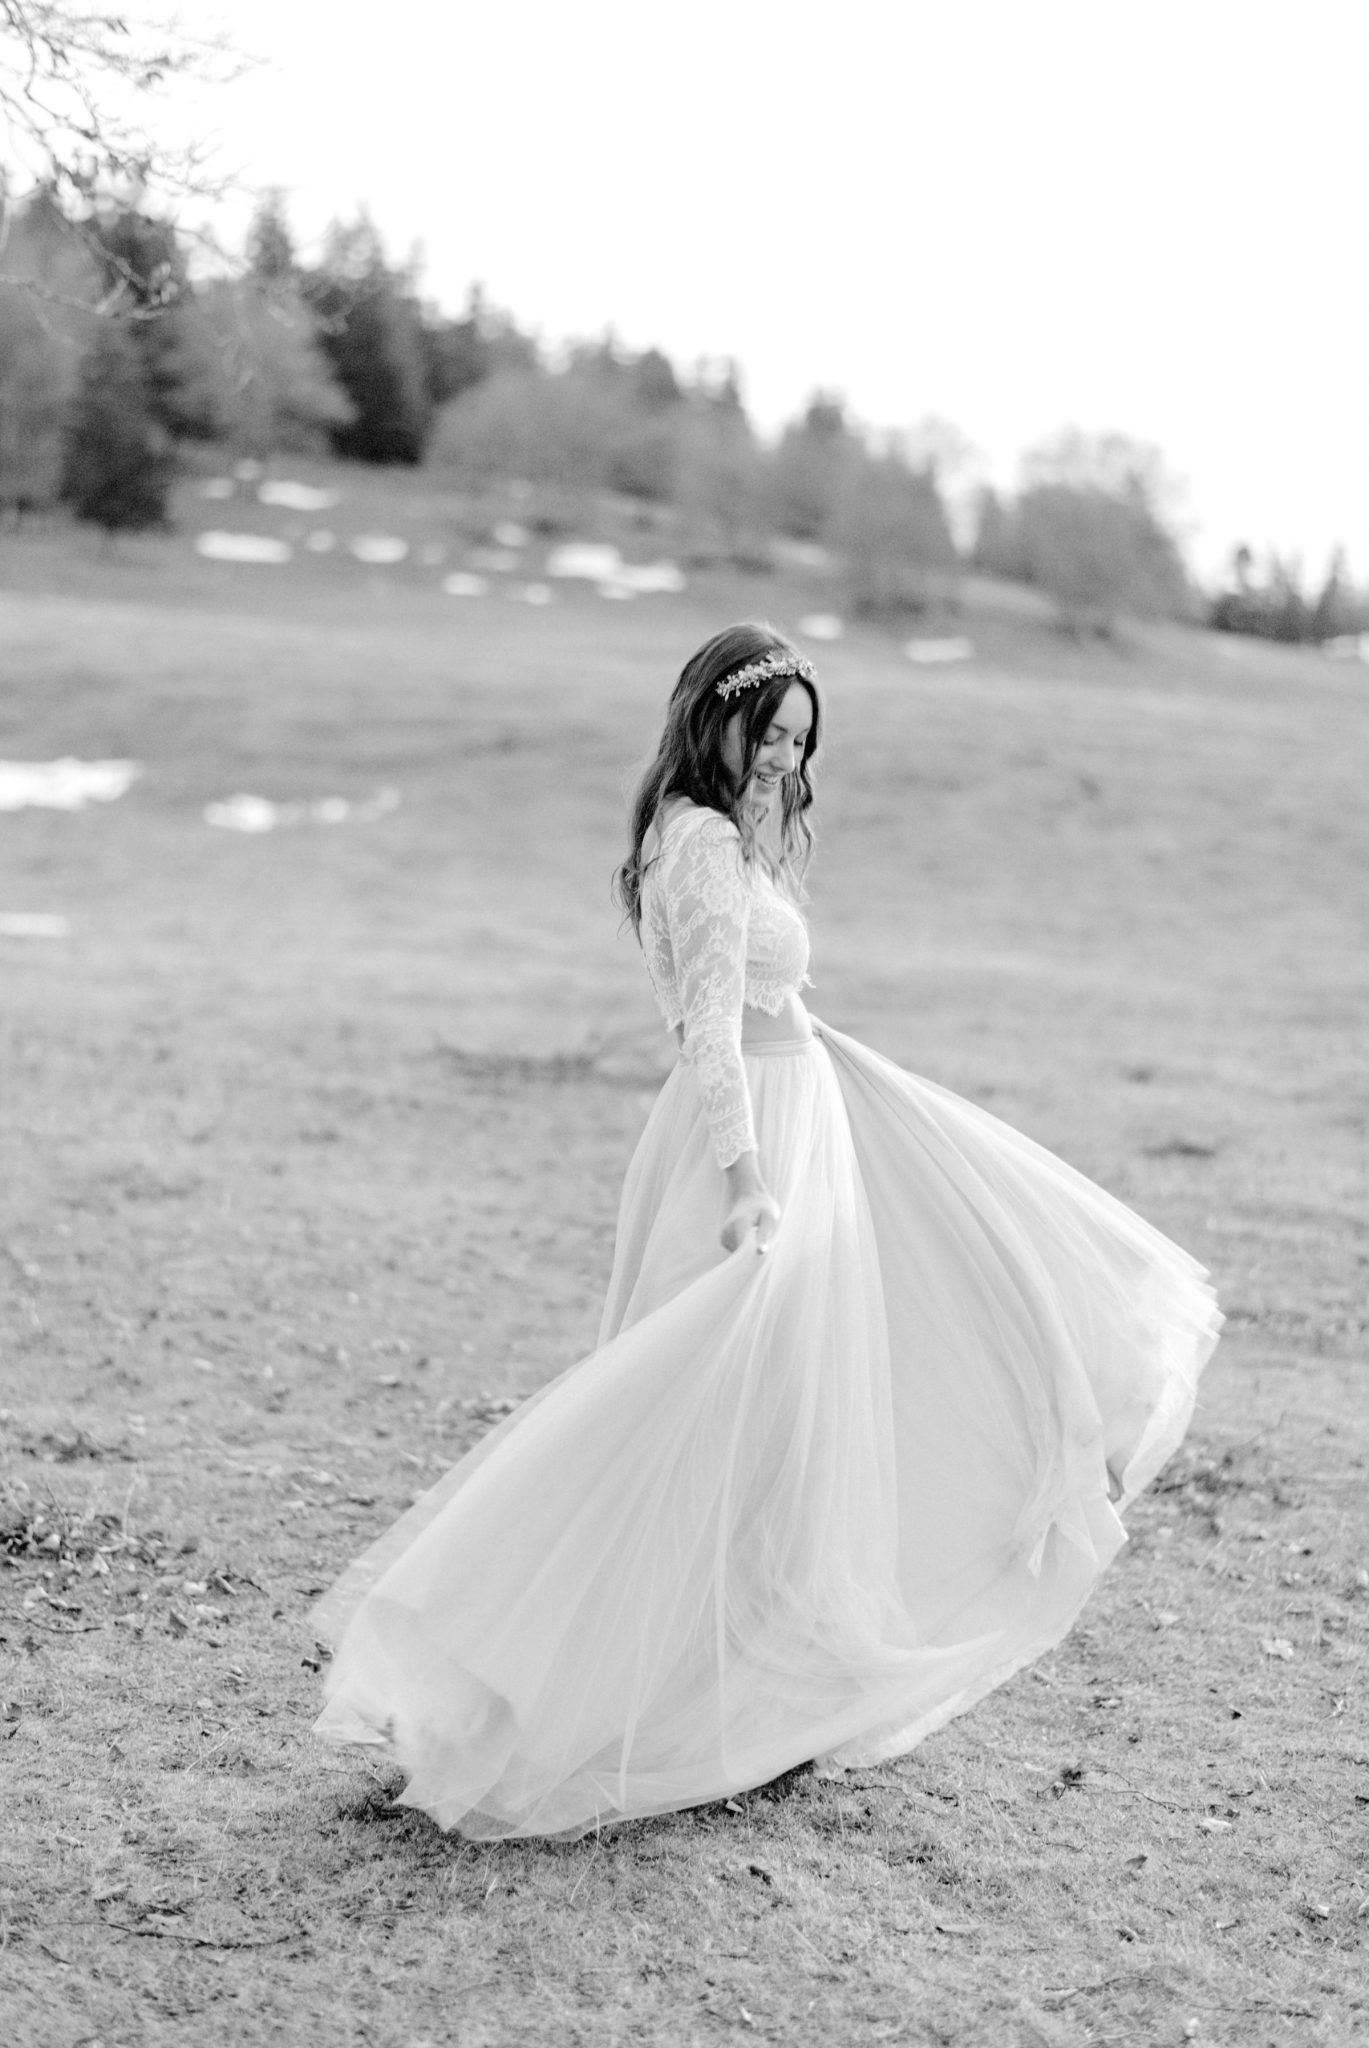 Luana & Guillaume | Creux-du-Van, Switzerland - Wedding photographer ...